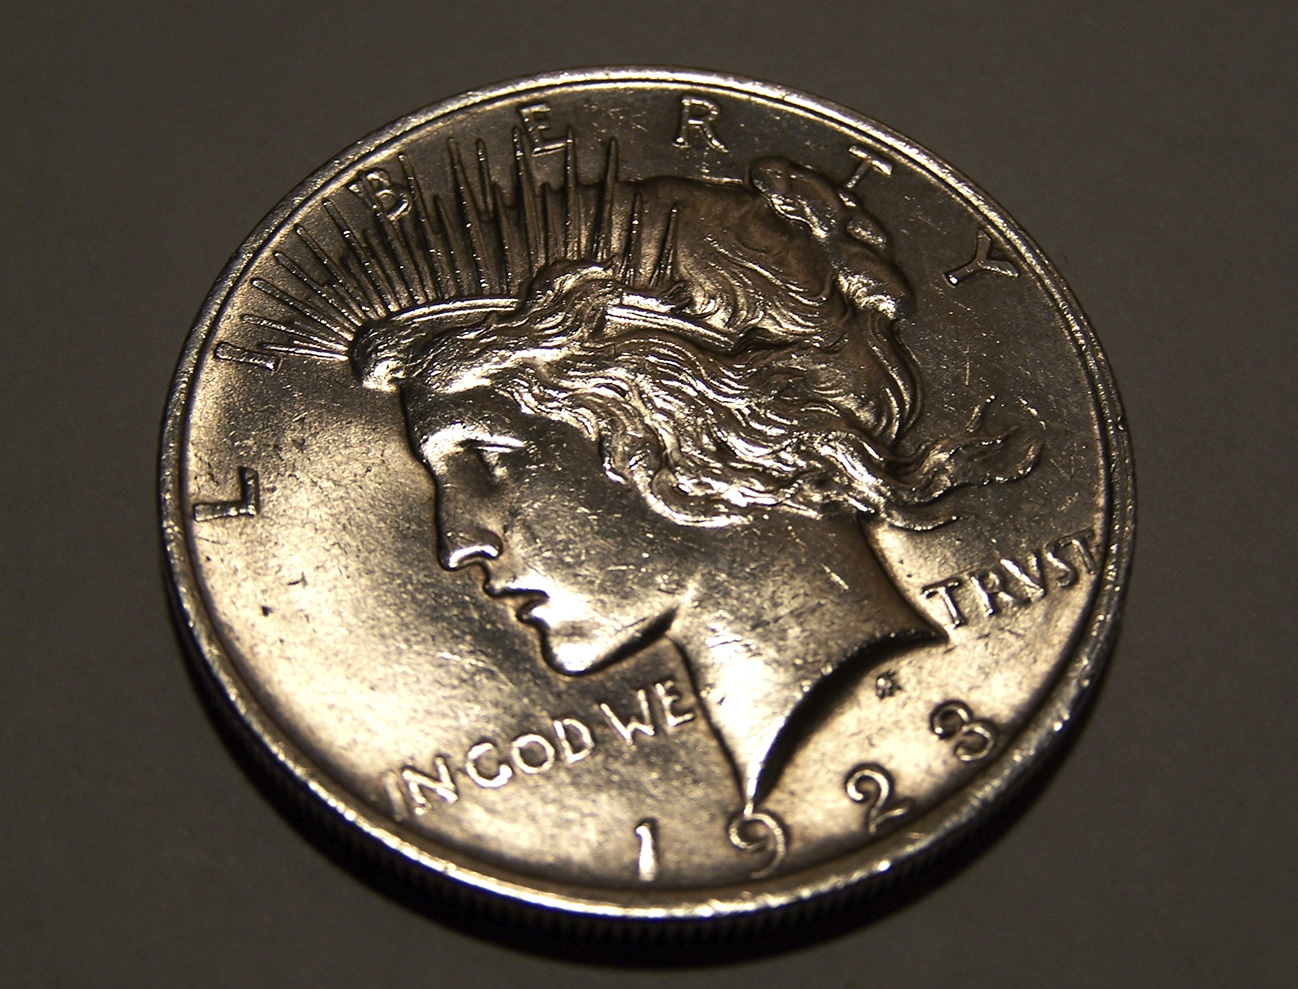 Photo of collectible coins